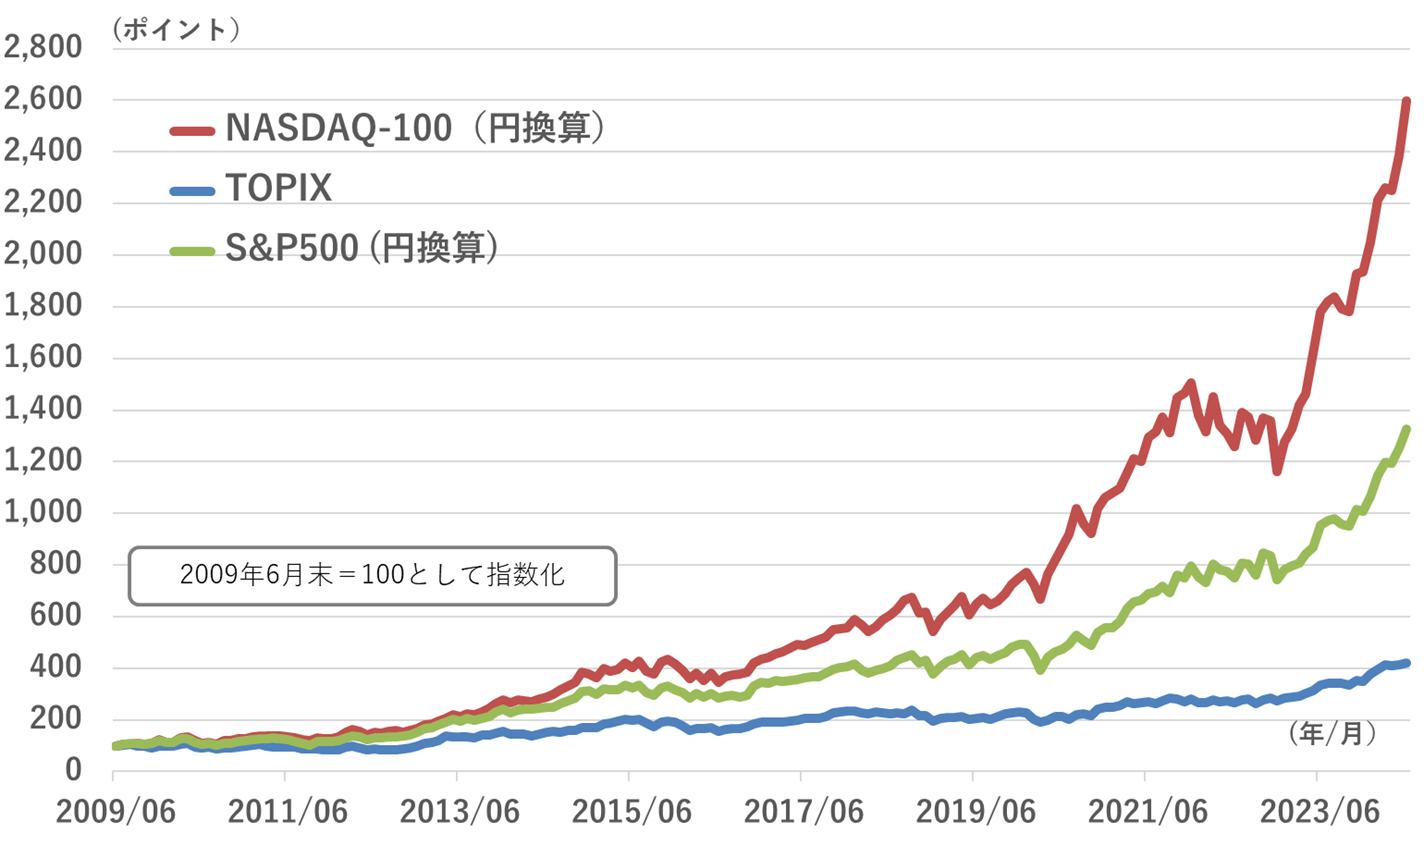 NASDAQ-100指数のパフォーマンス推移グラフ